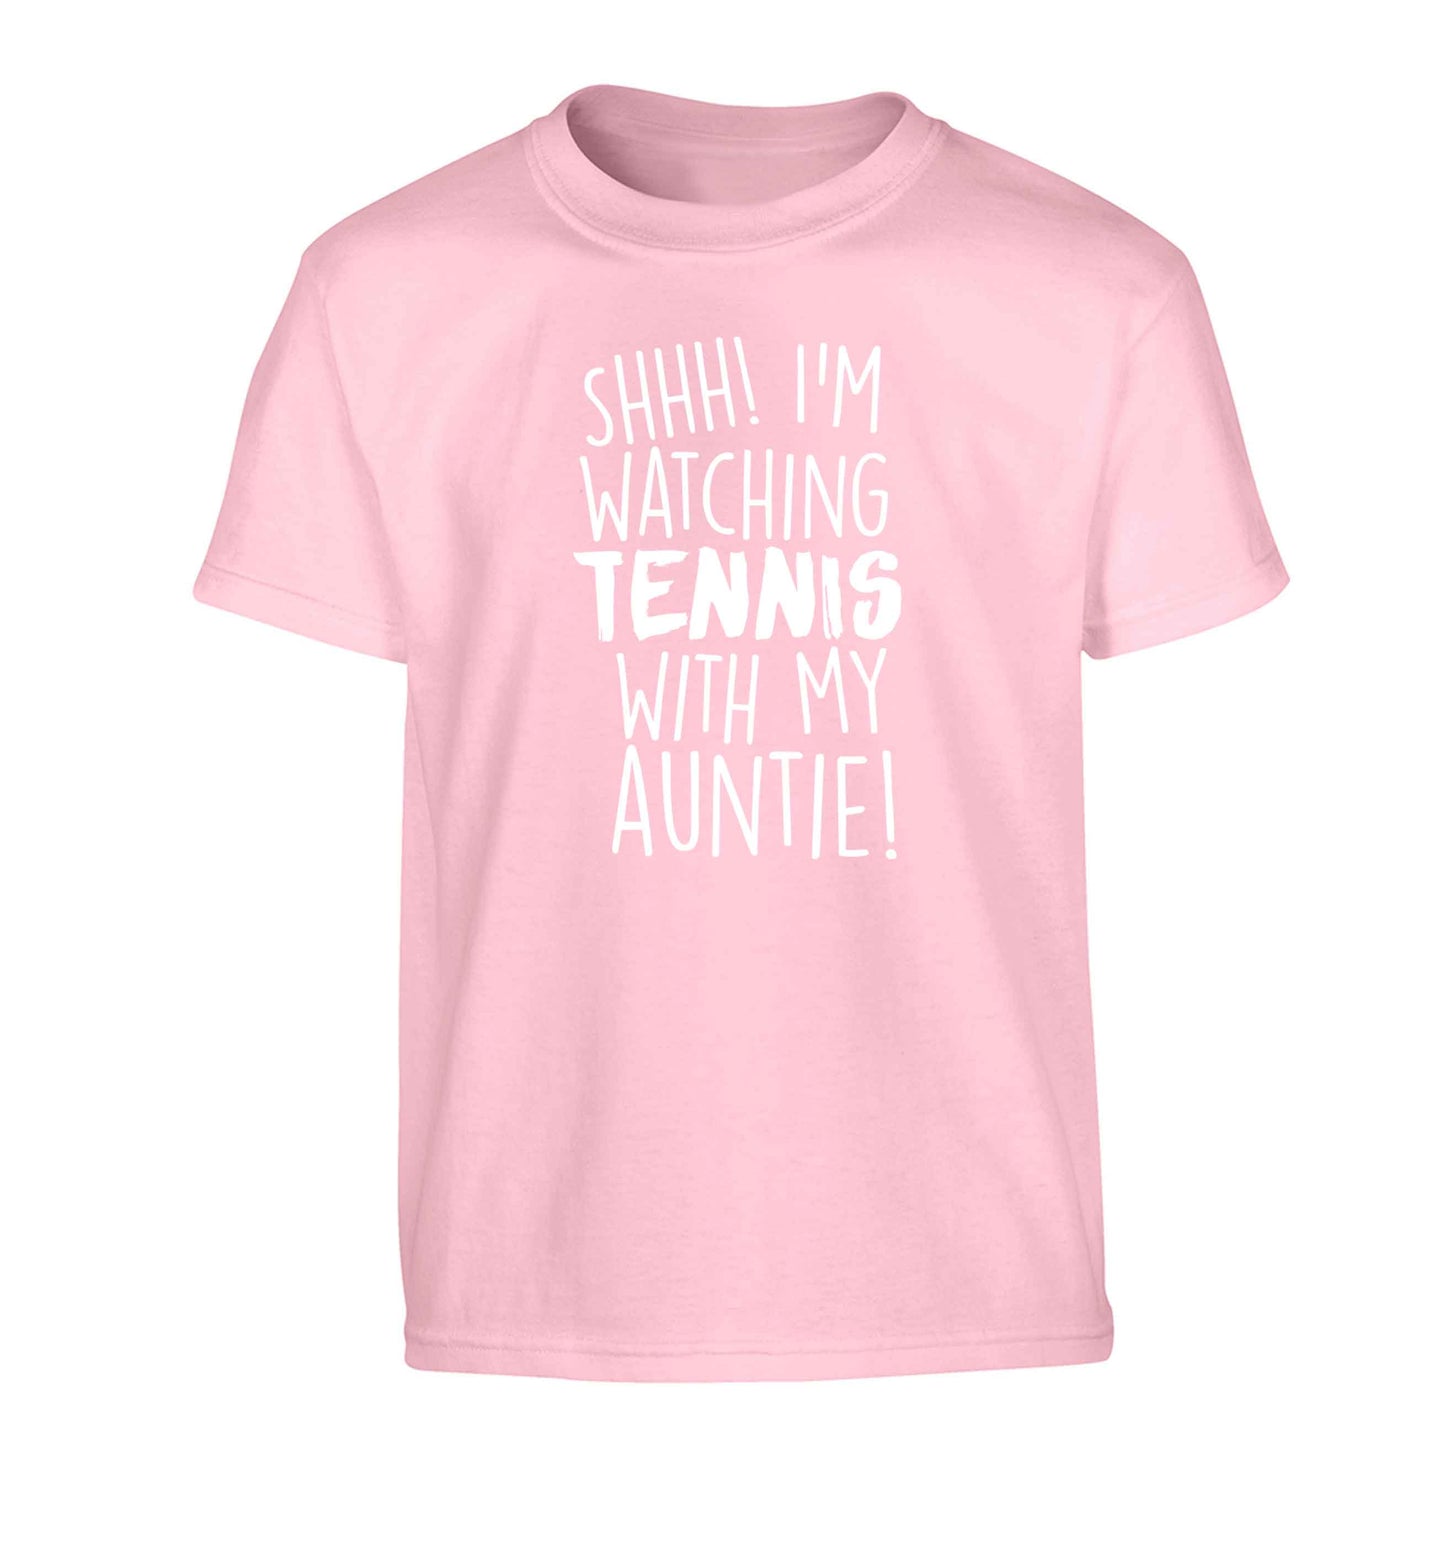 Shh! I'm watching tennis with my auntie! Children's light pink Tshirt 12-13 Years